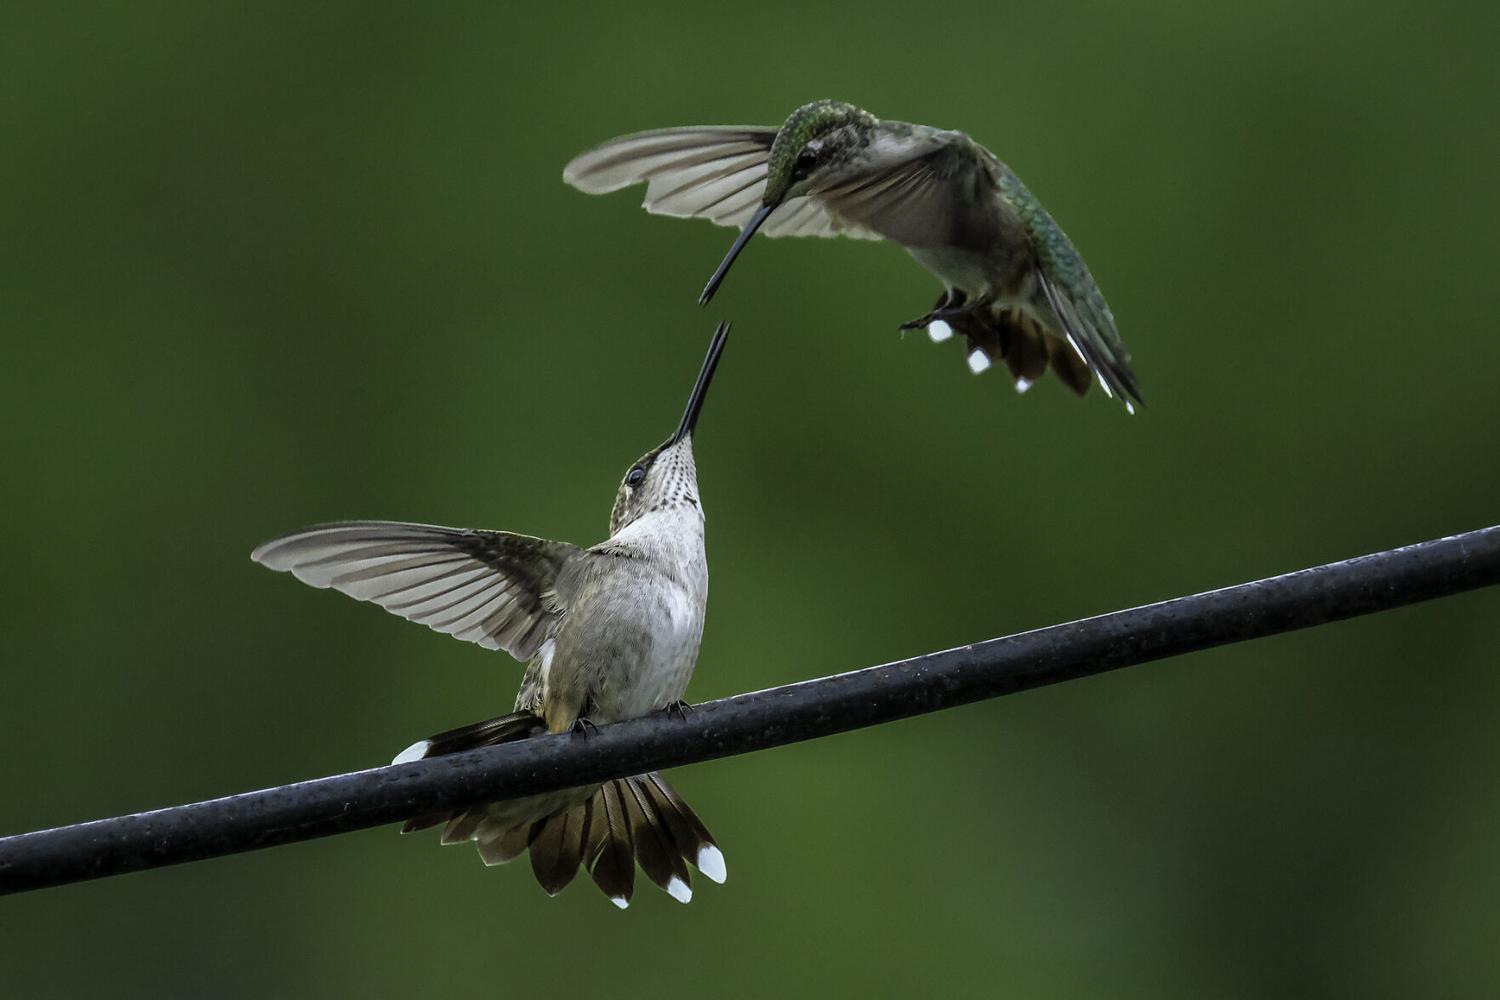 Hummingbird Day planned at War Bluff Valley